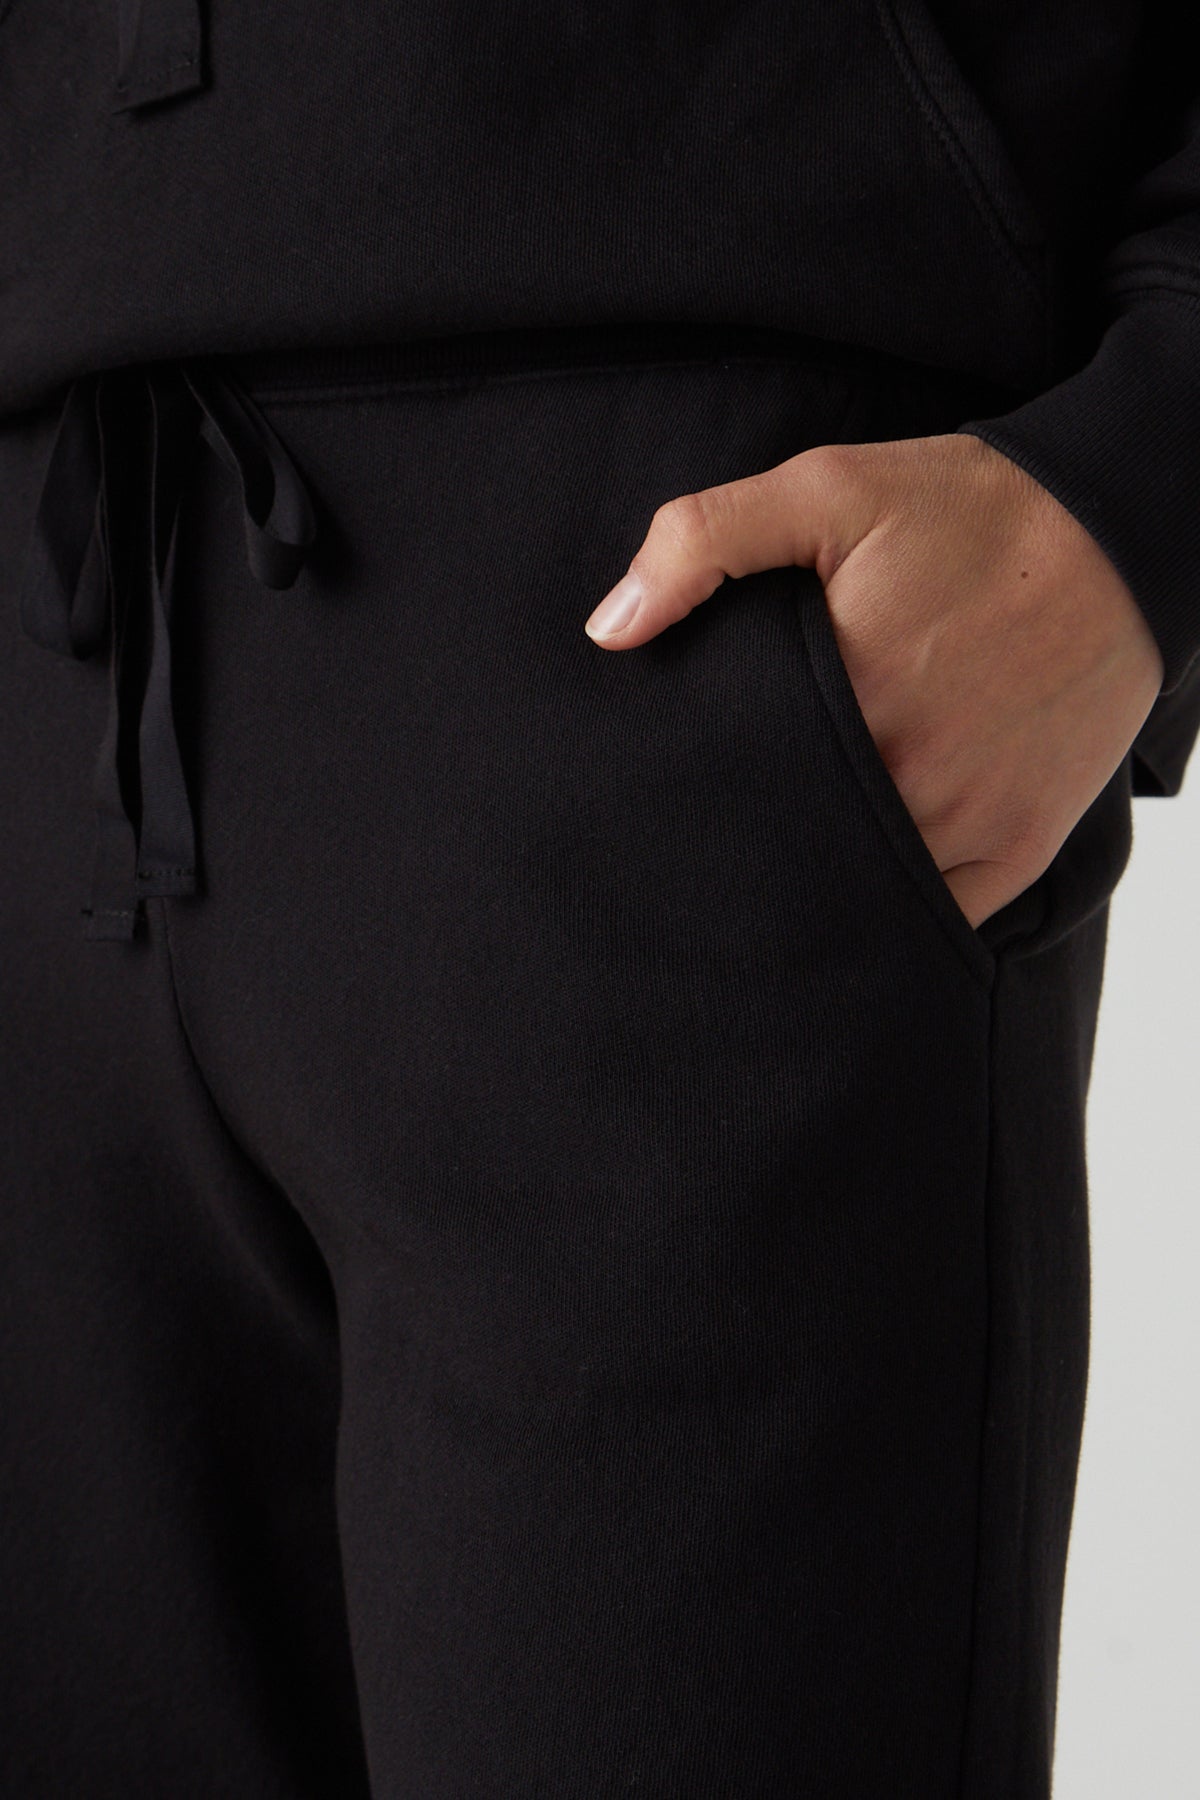 a woman wearing Velvet by Jenny Graham black sweatpants called LAGUNA SWEATSHORT and a hoodie.-25324534333633